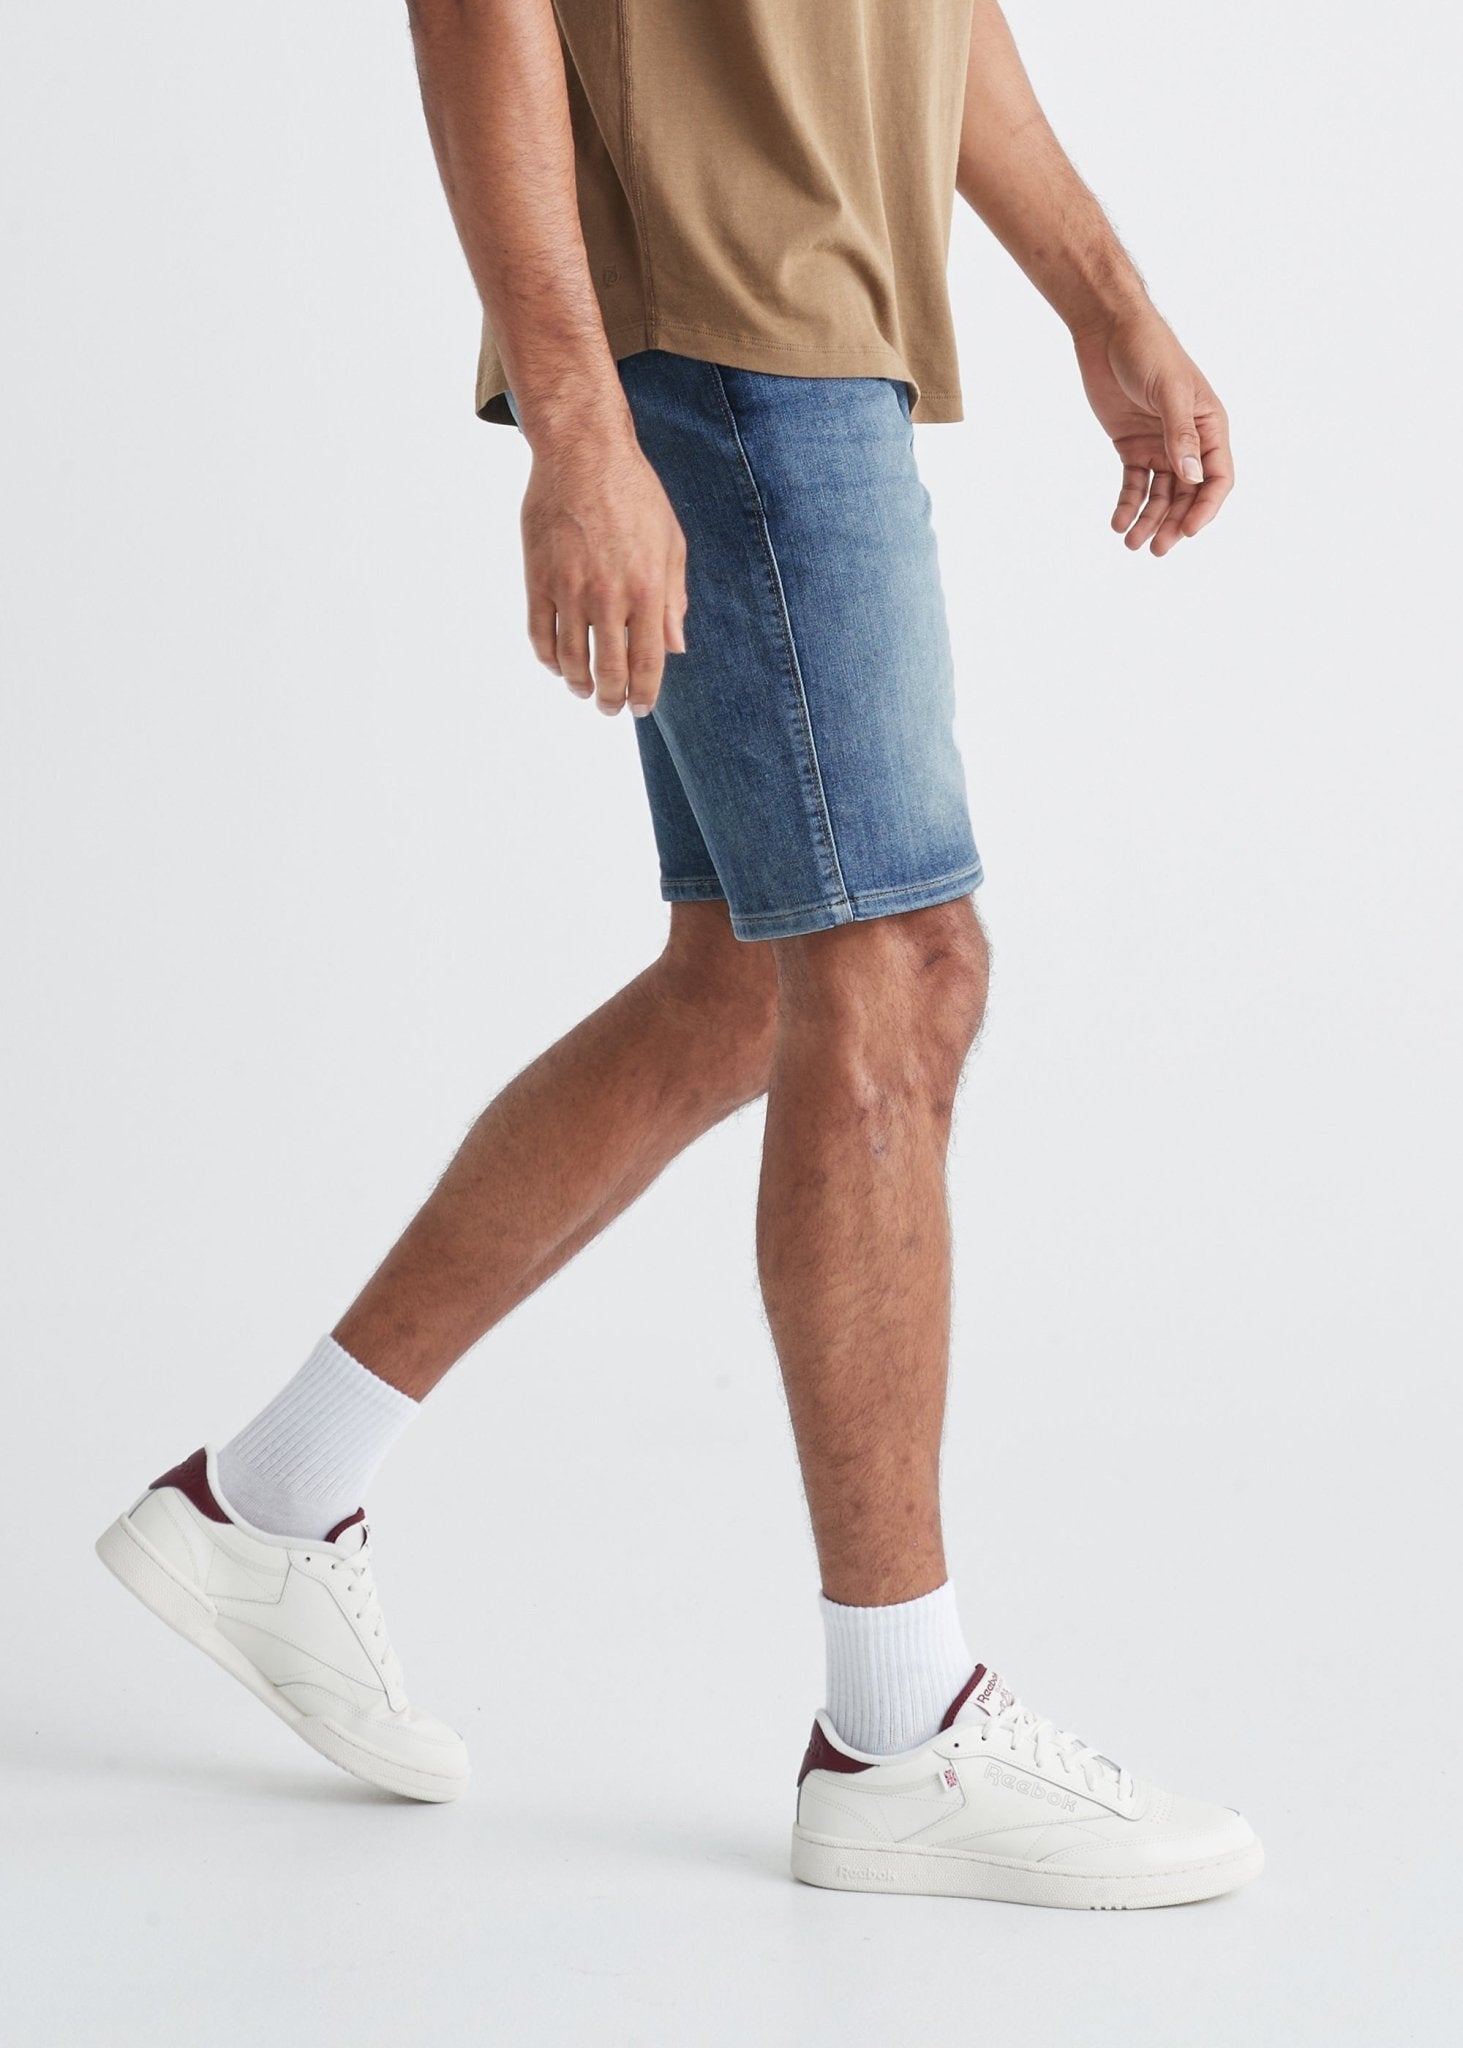 Slim Fit Denim Shorts - Light denim blue - Men | H&M US